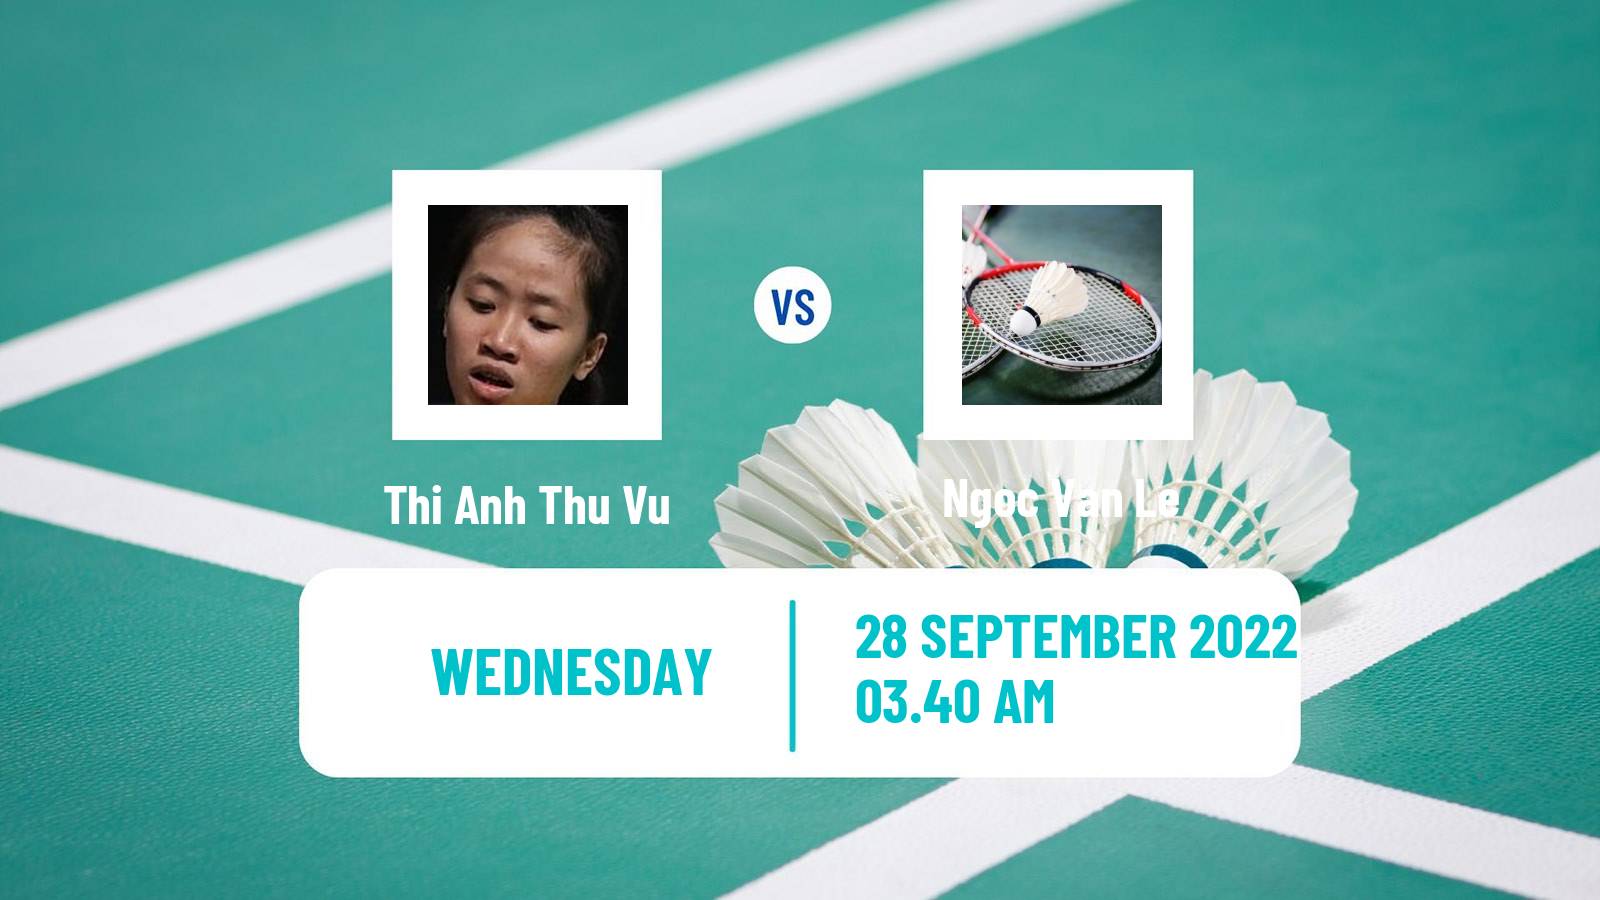 Badminton Badminton Thi Anh Thu Vu - Ngoc Van Le